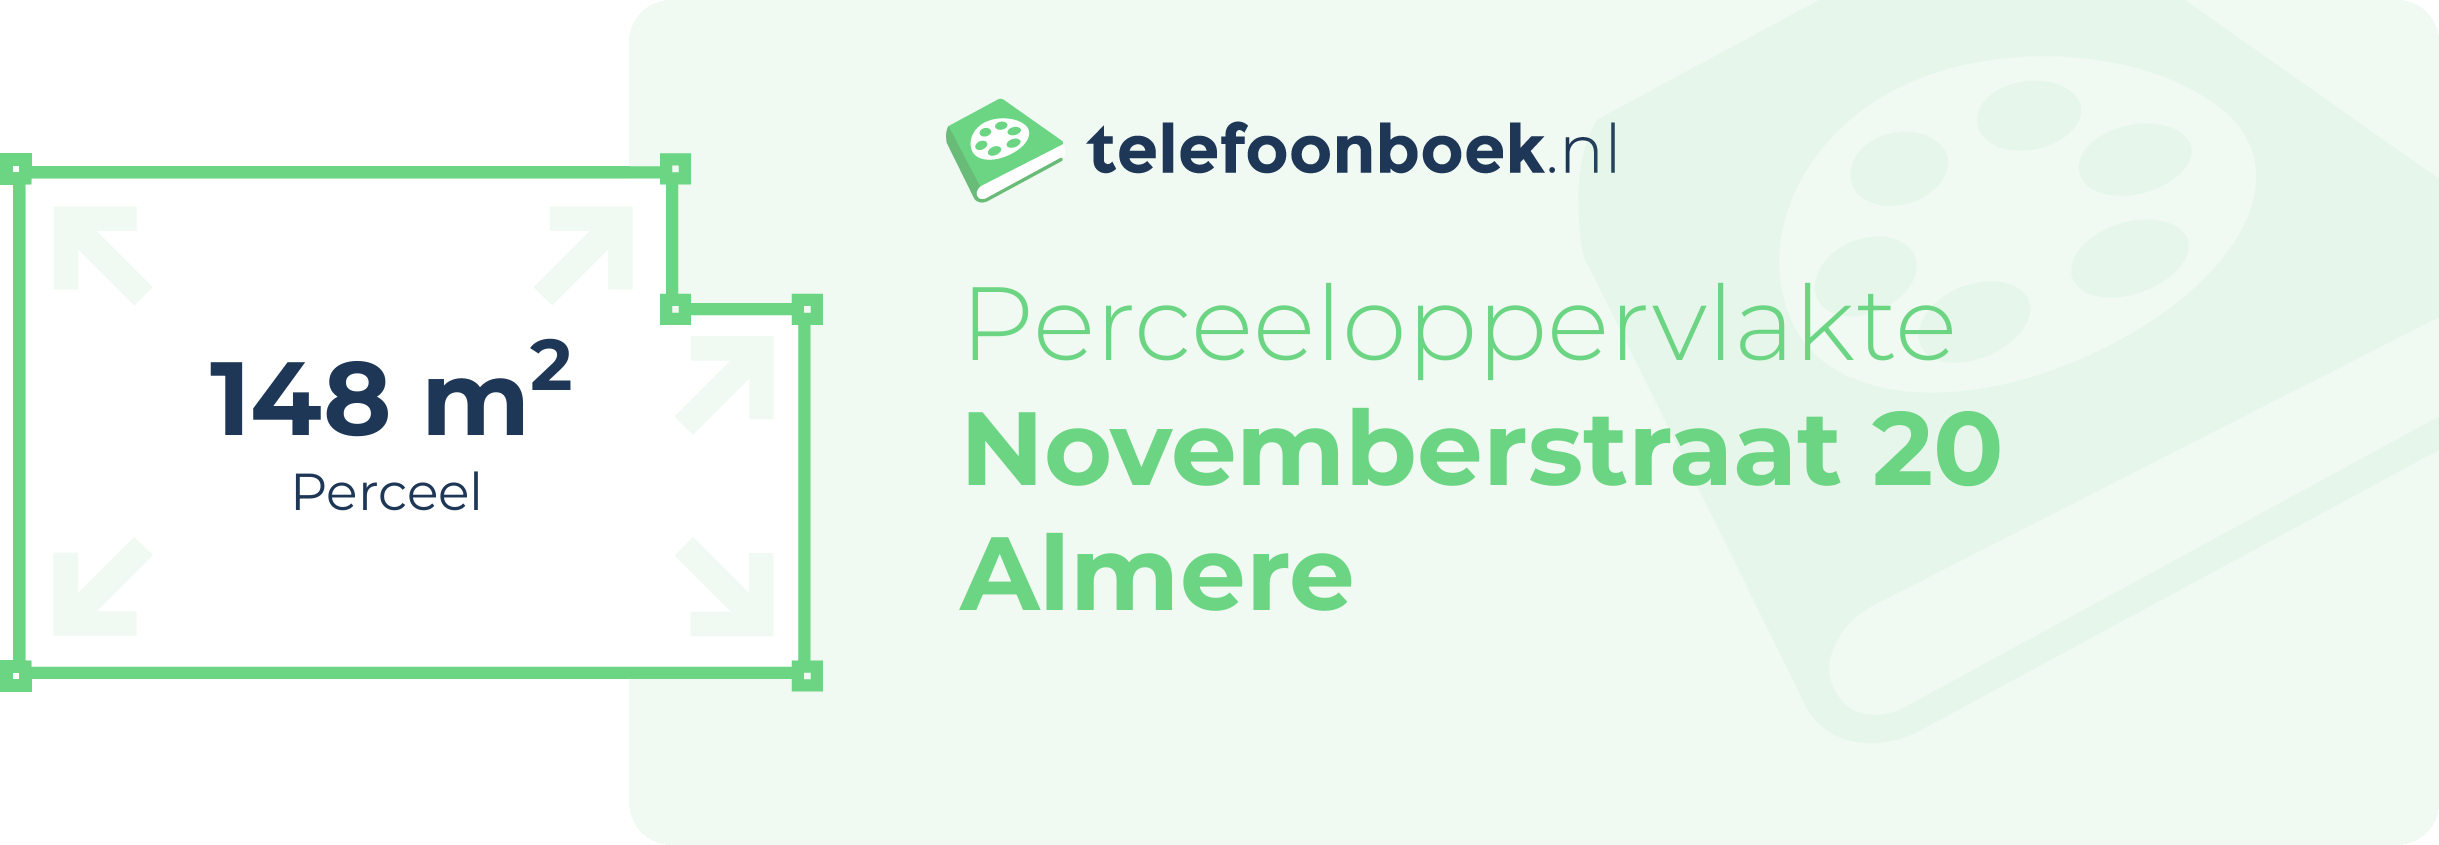 Perceeloppervlakte Novemberstraat 20 Almere